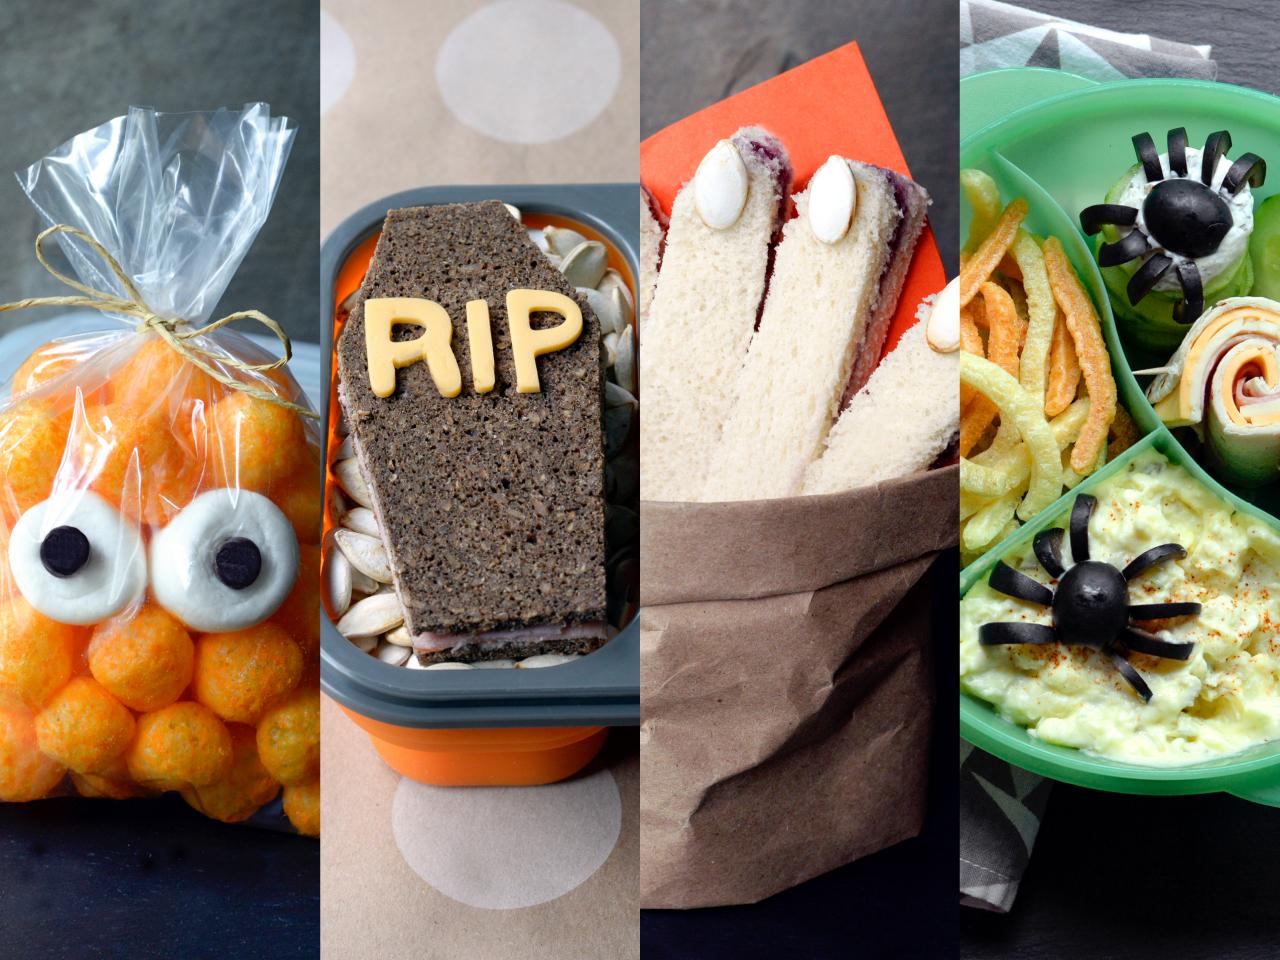 Top Ten Lunchbox Ideas, Recipe